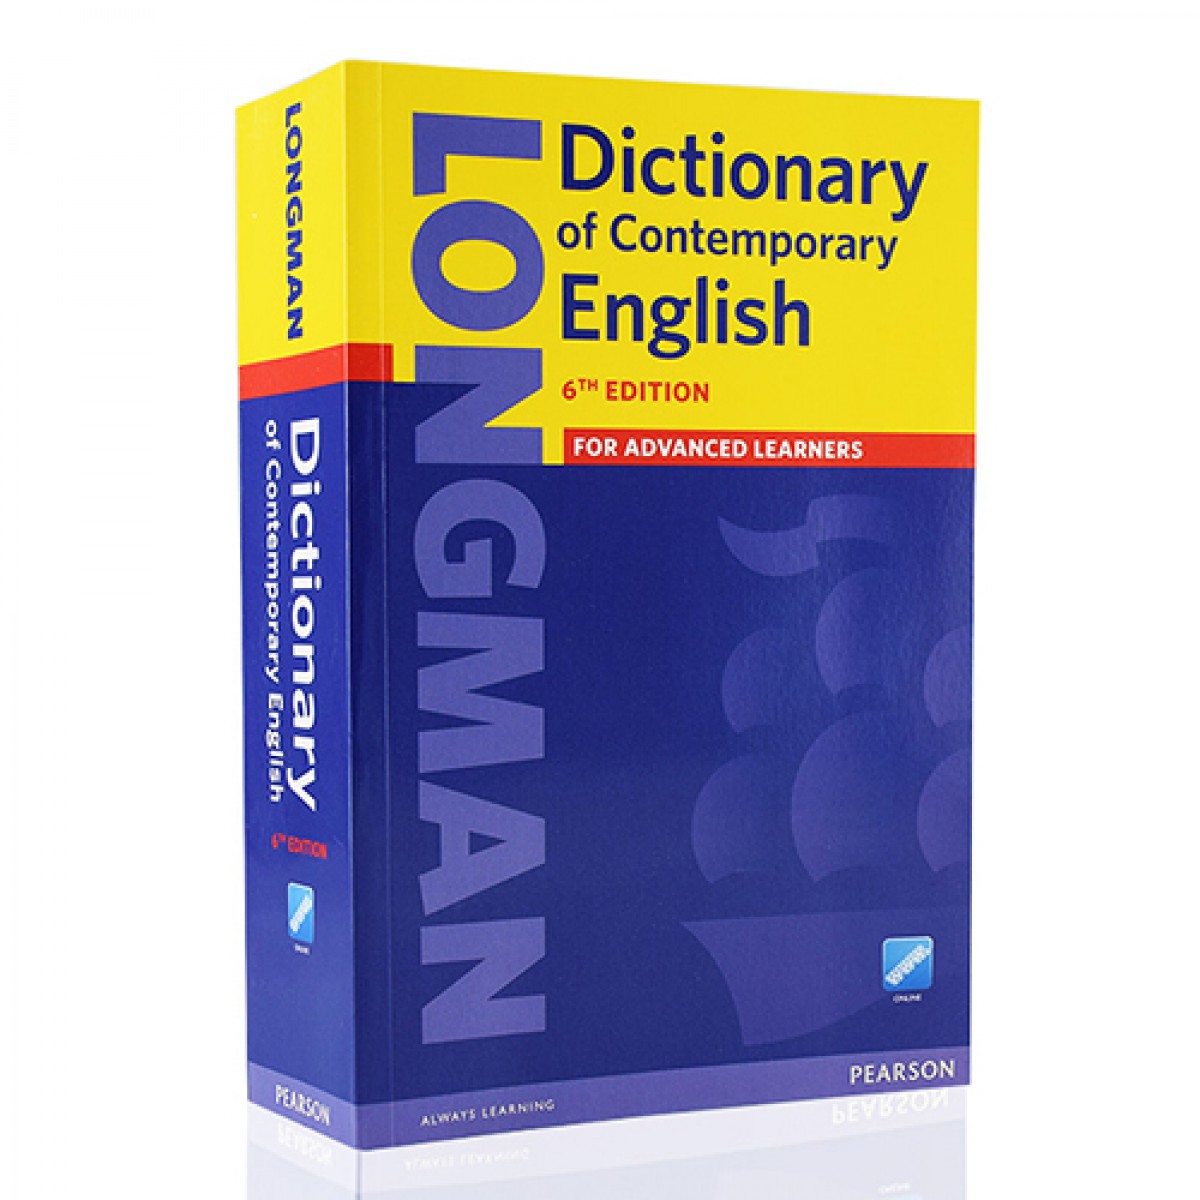 英文原版Longman Dictionary of Contemporary English朗文當代高階英語詞典第6版